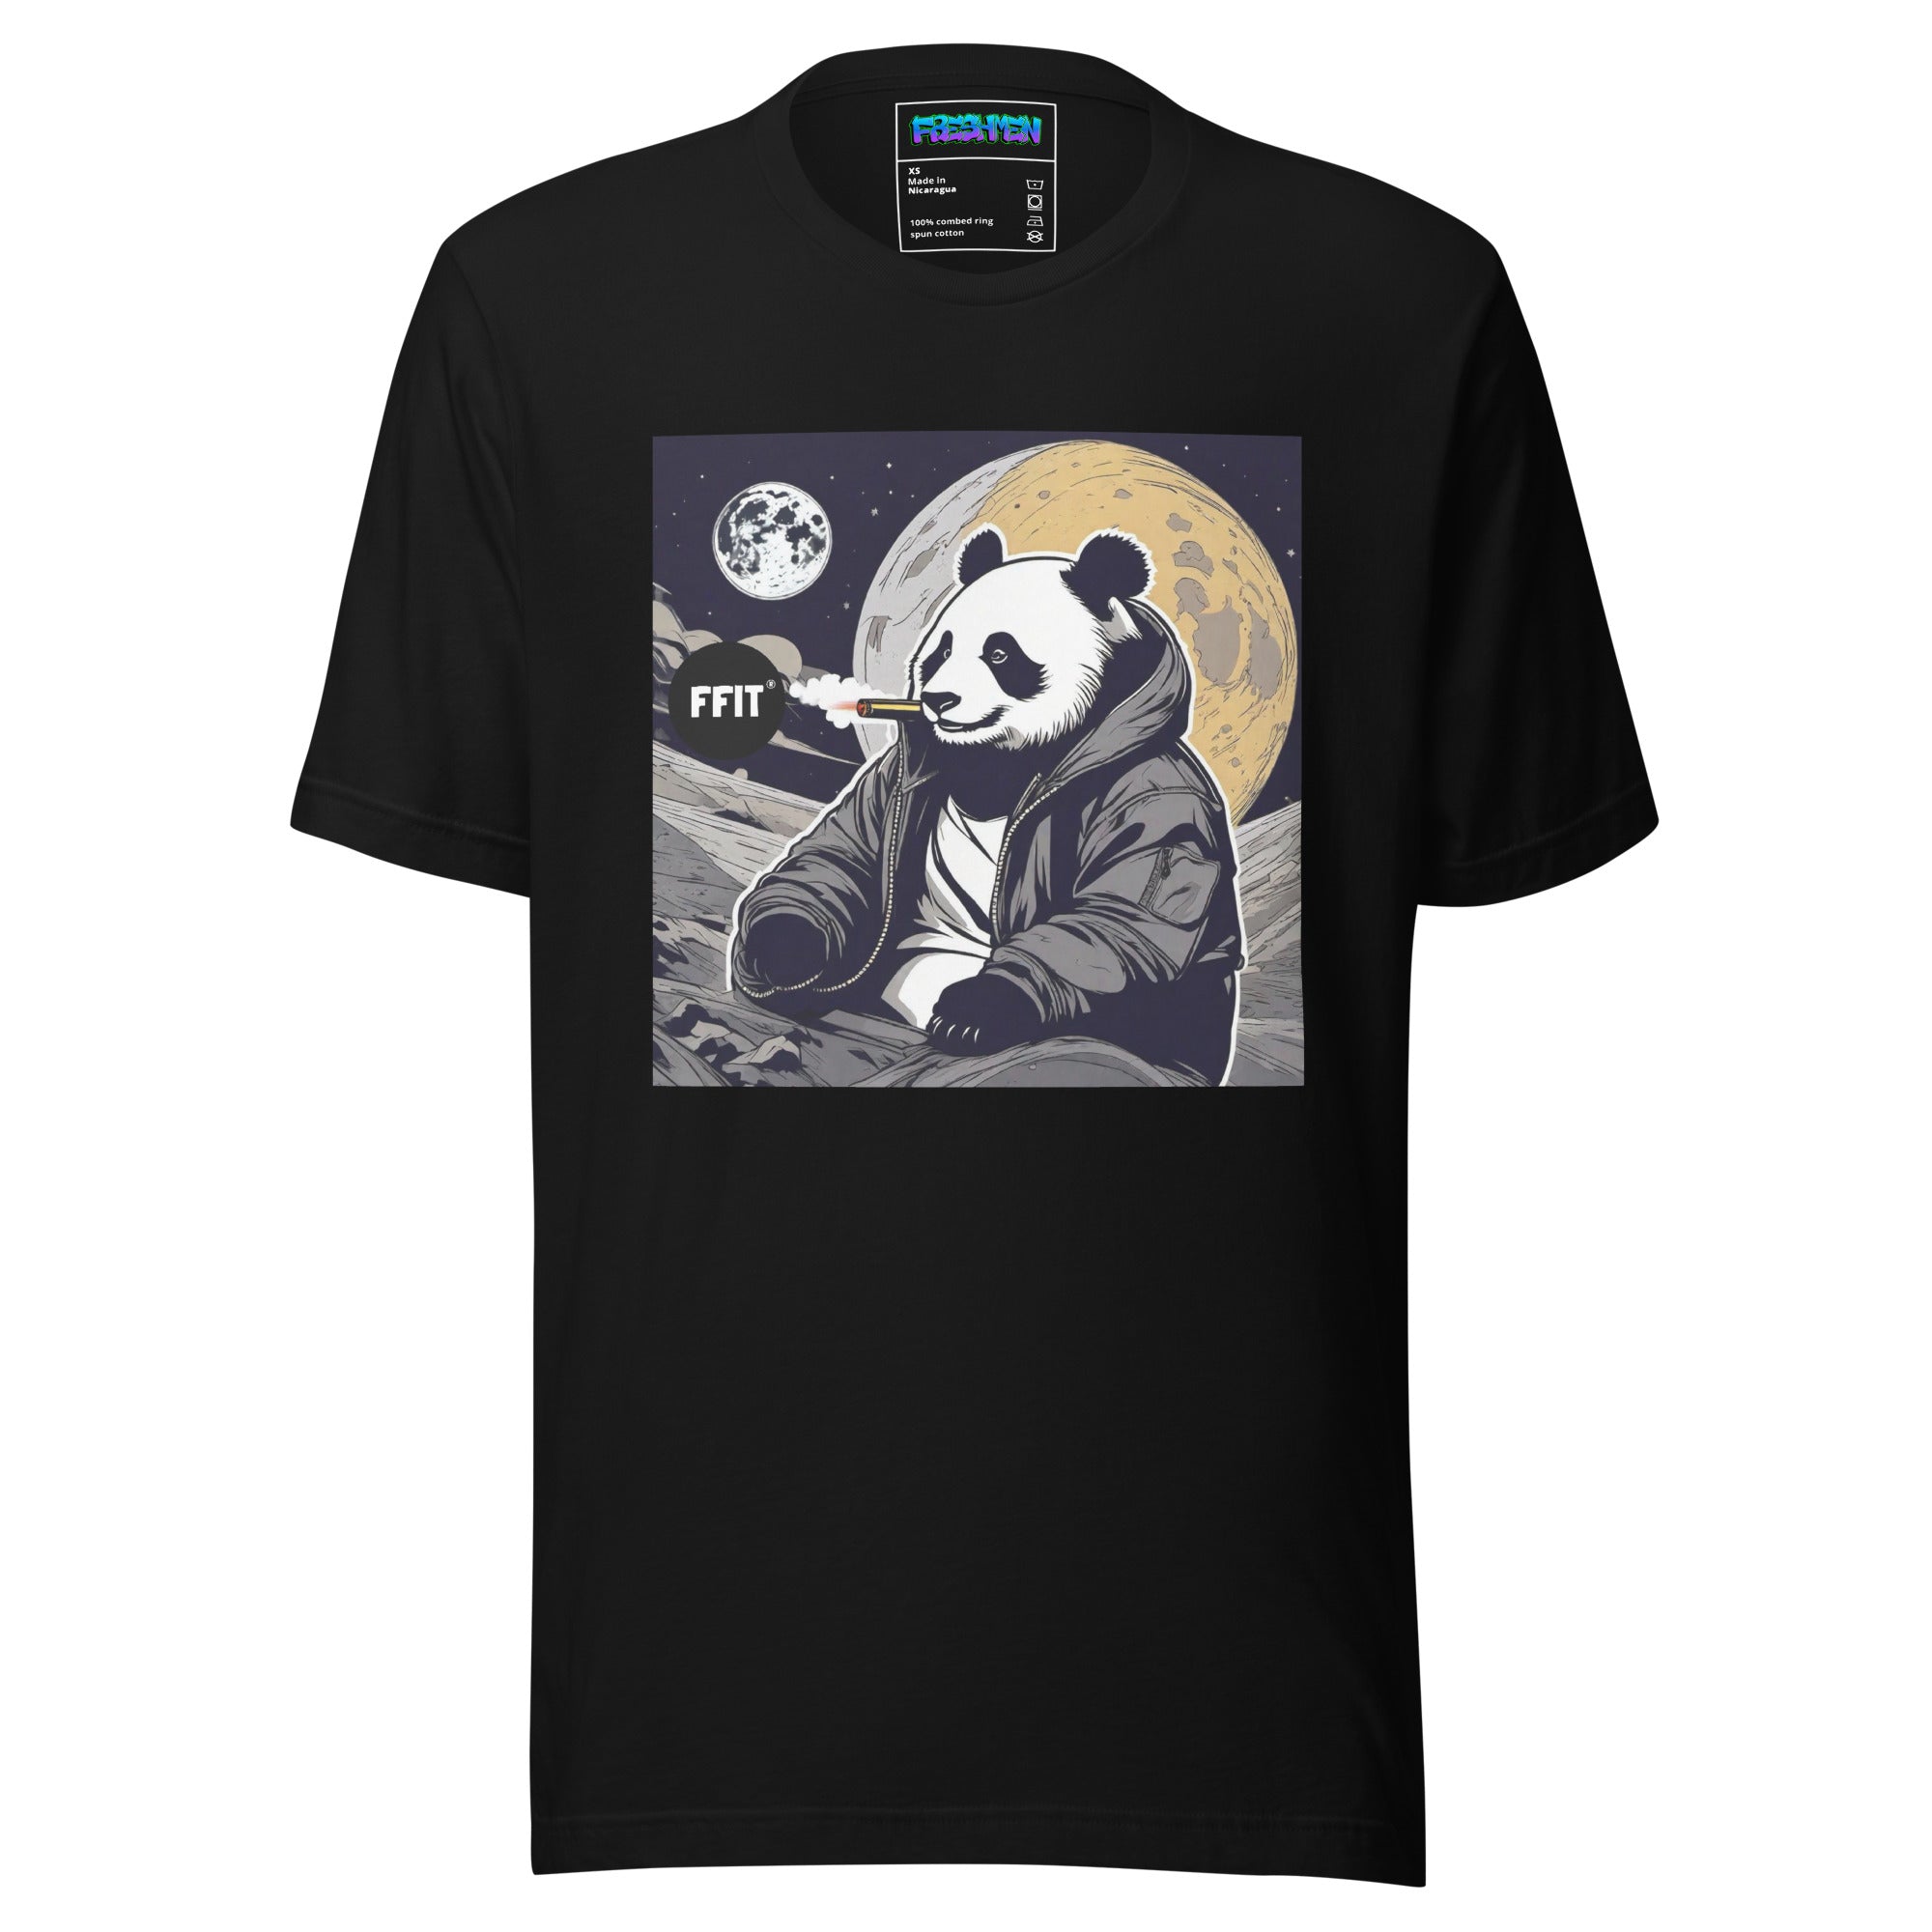 Freshmen FFIT Panda Moon Trip Unisex T-Shirt